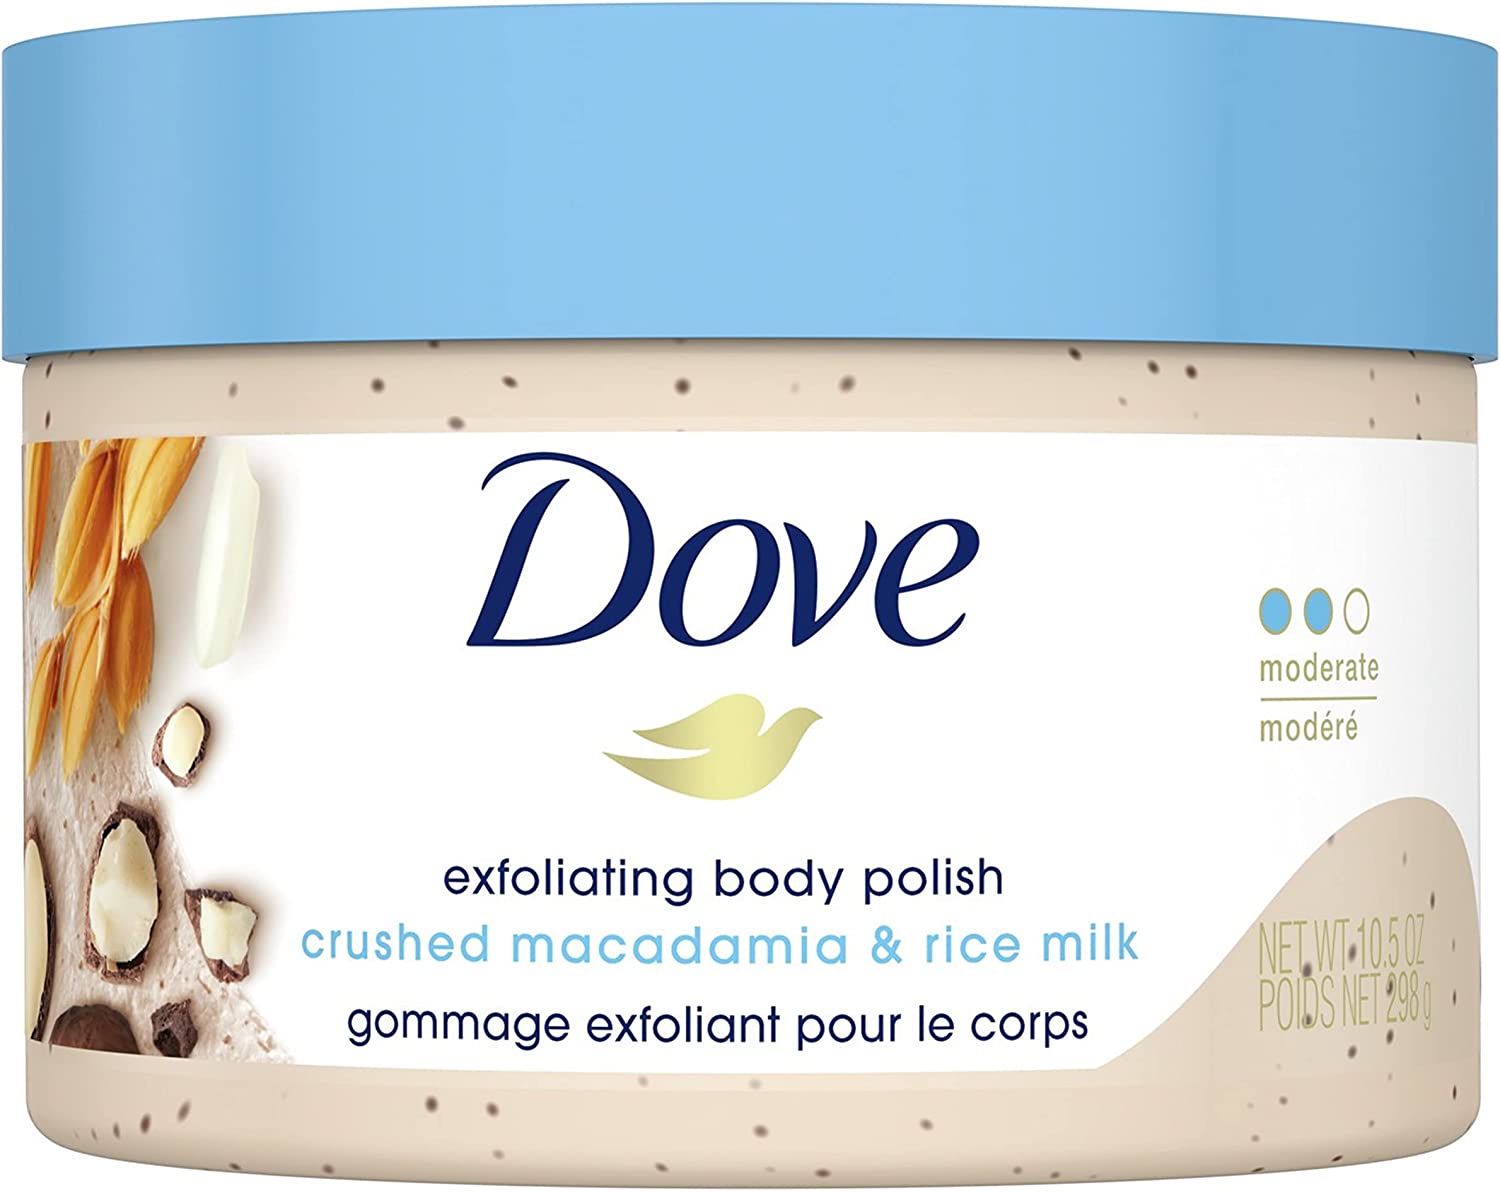 Dove body polish